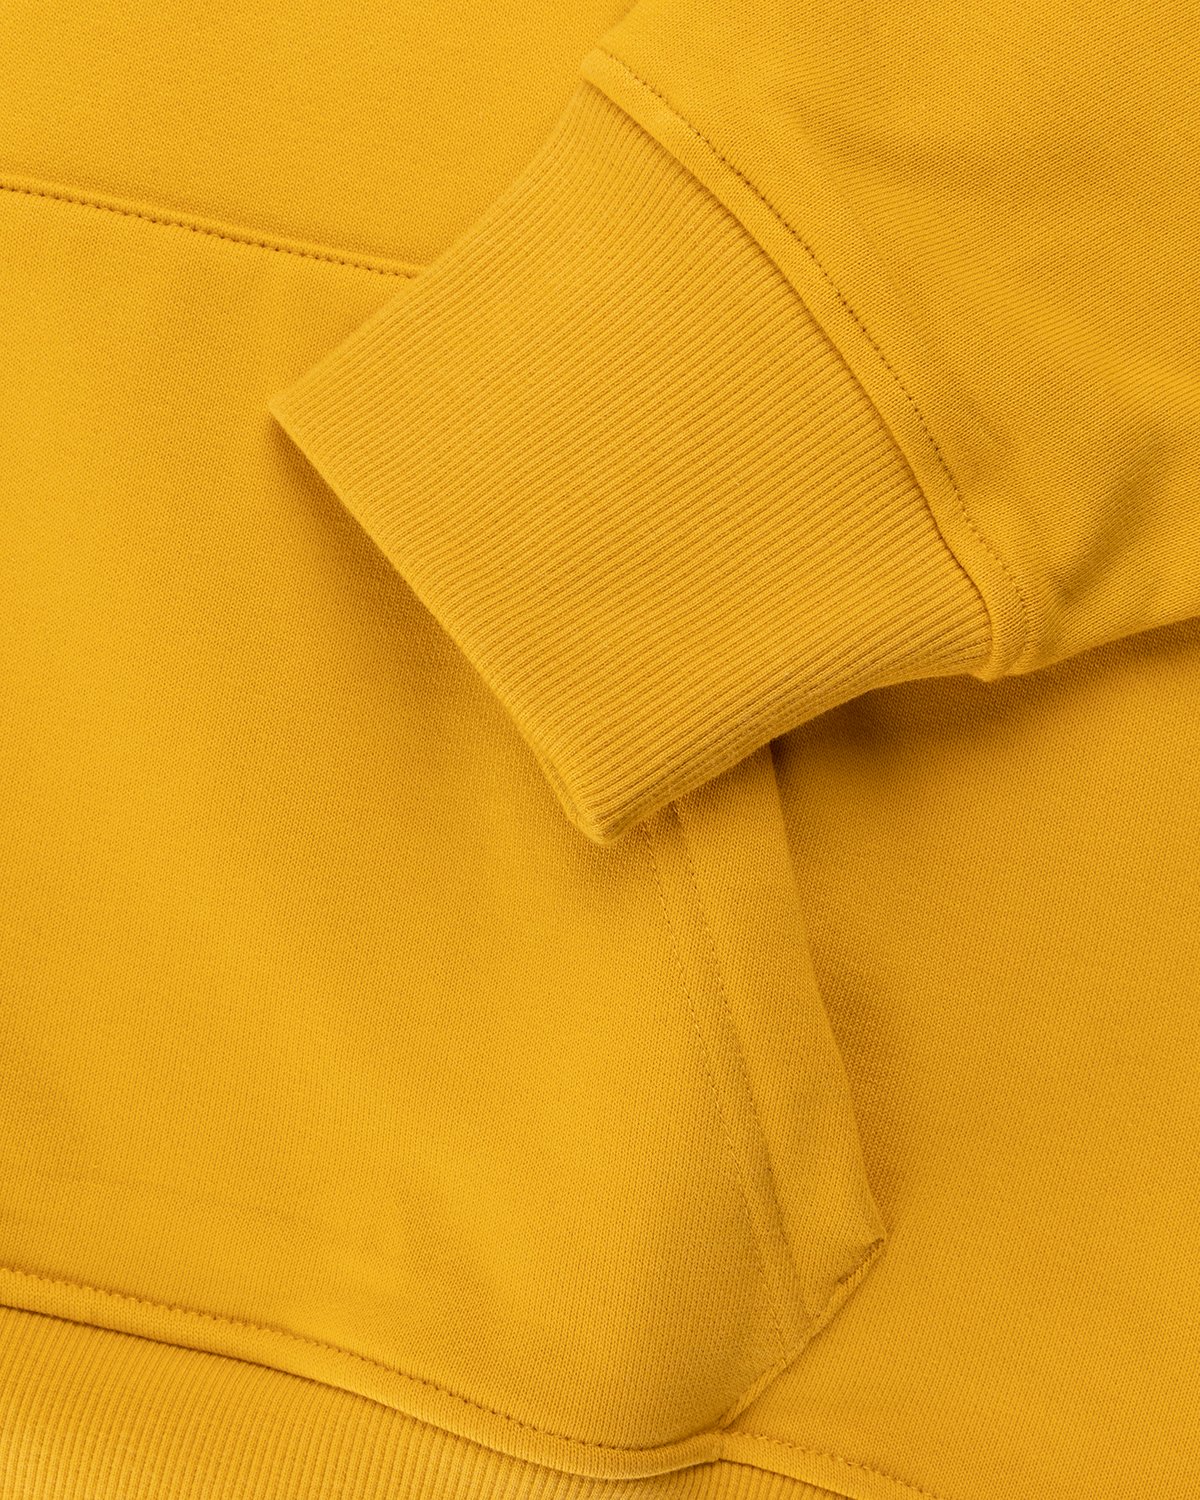 New Balance - Conversations Amongst Us Hoodie Aspen Yellow - Clothing - Yellow - Image 5